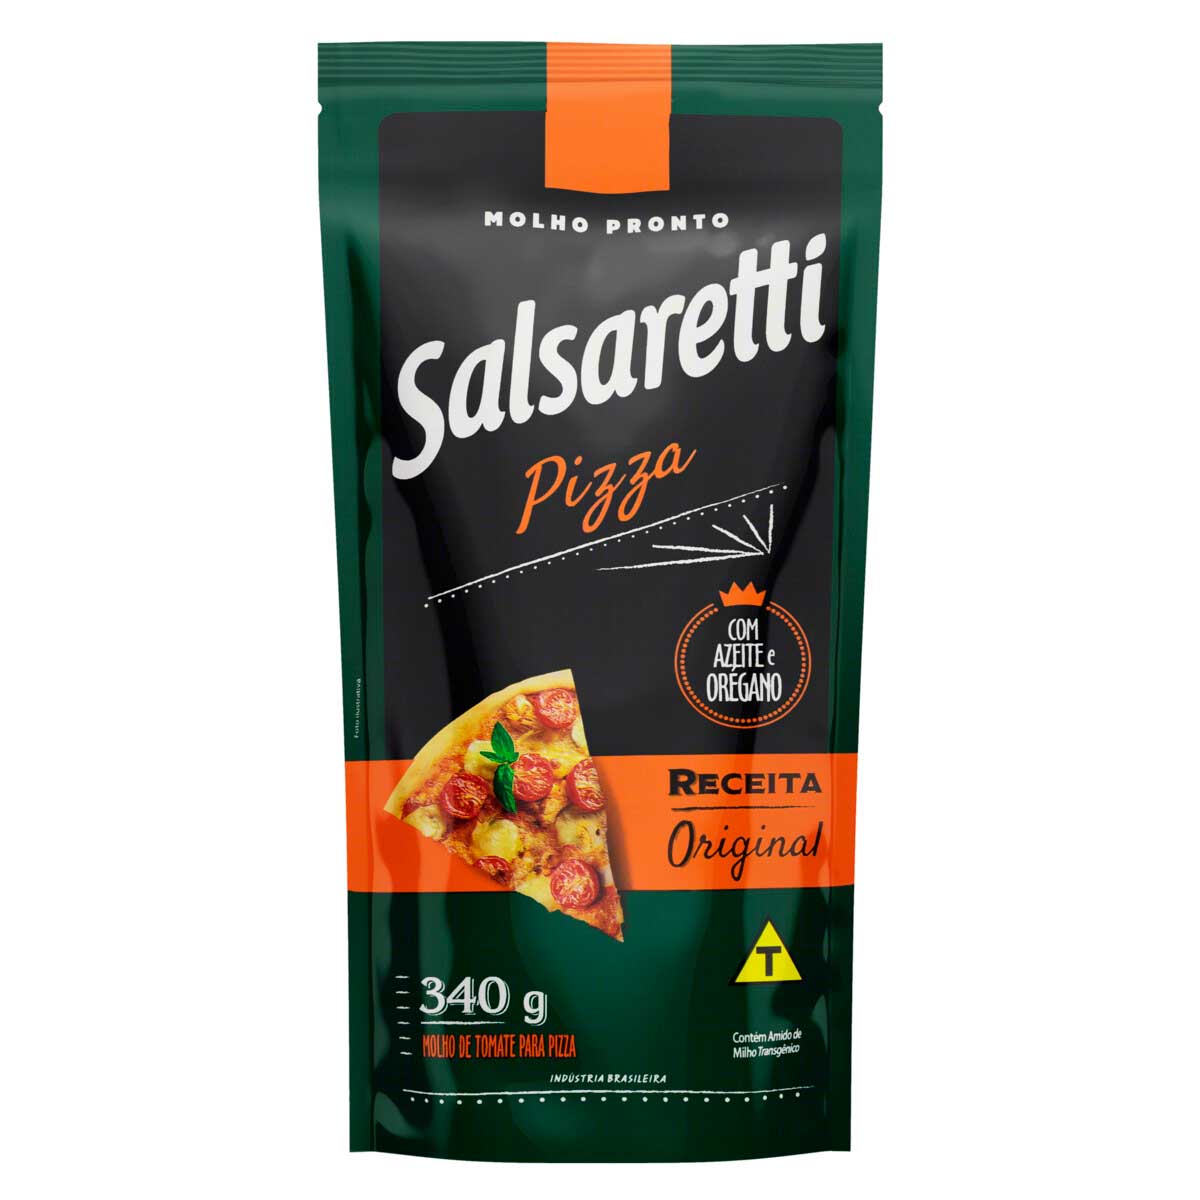 molho-de-tomate-pizza-salsaretti-sache-340-g-1.jpg